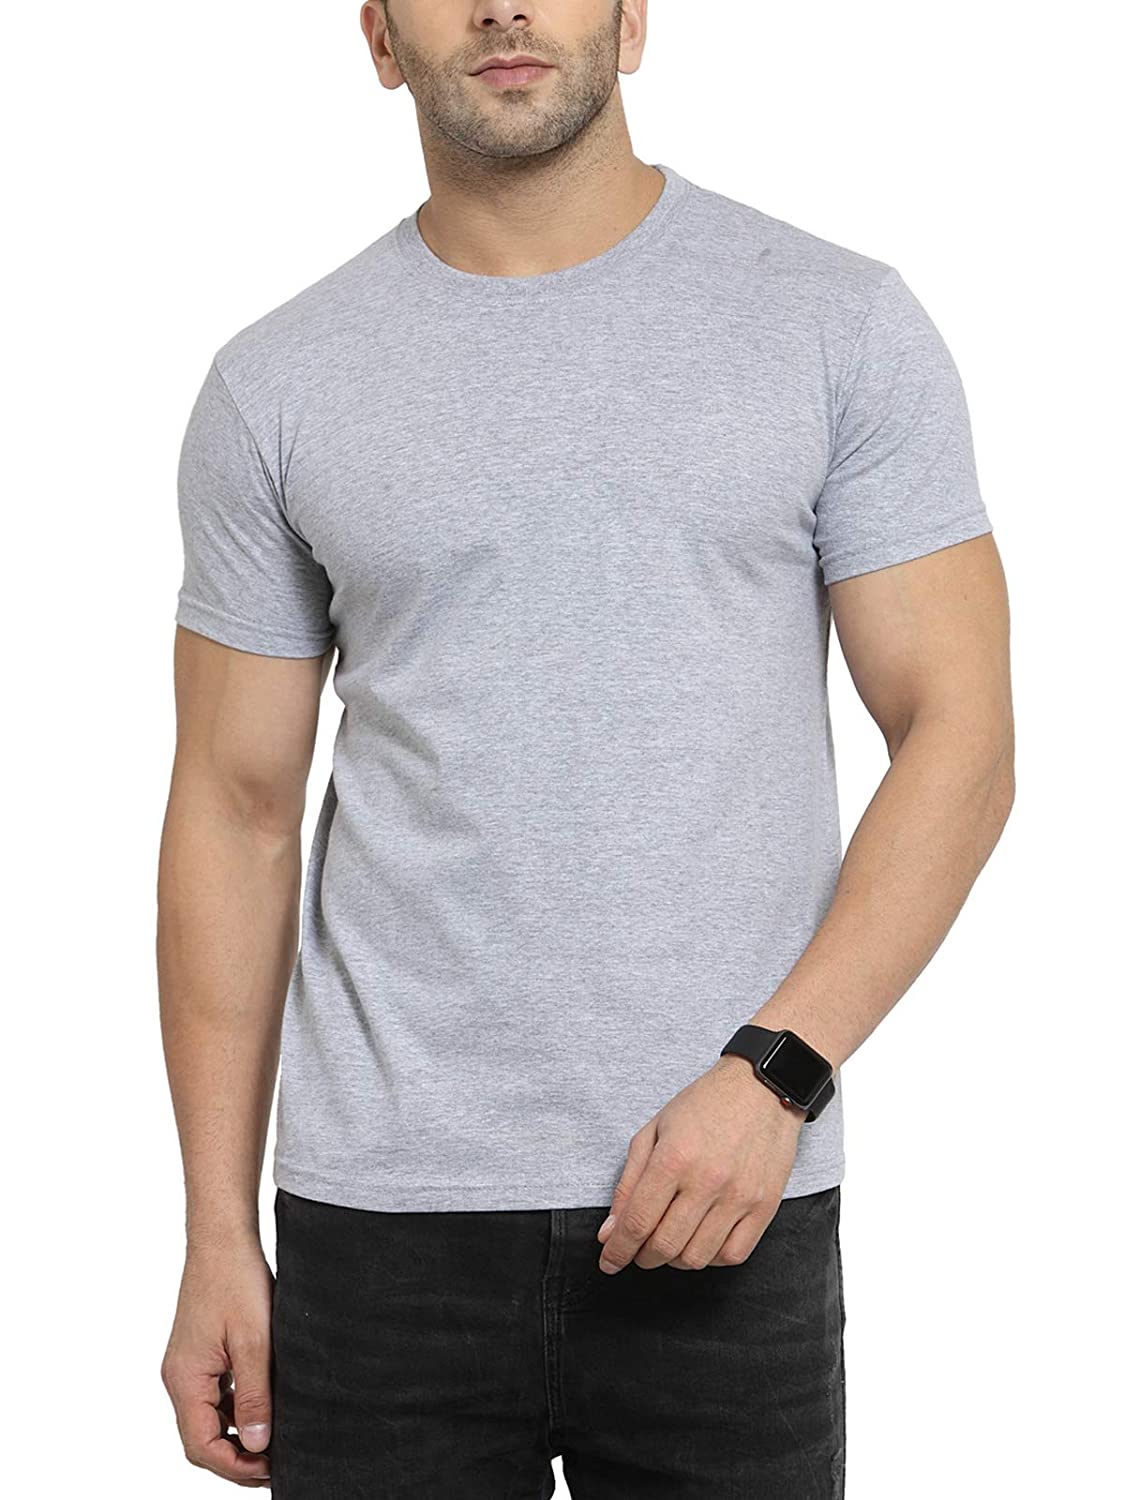 Men's stylish regular fit t-shirt july 2020